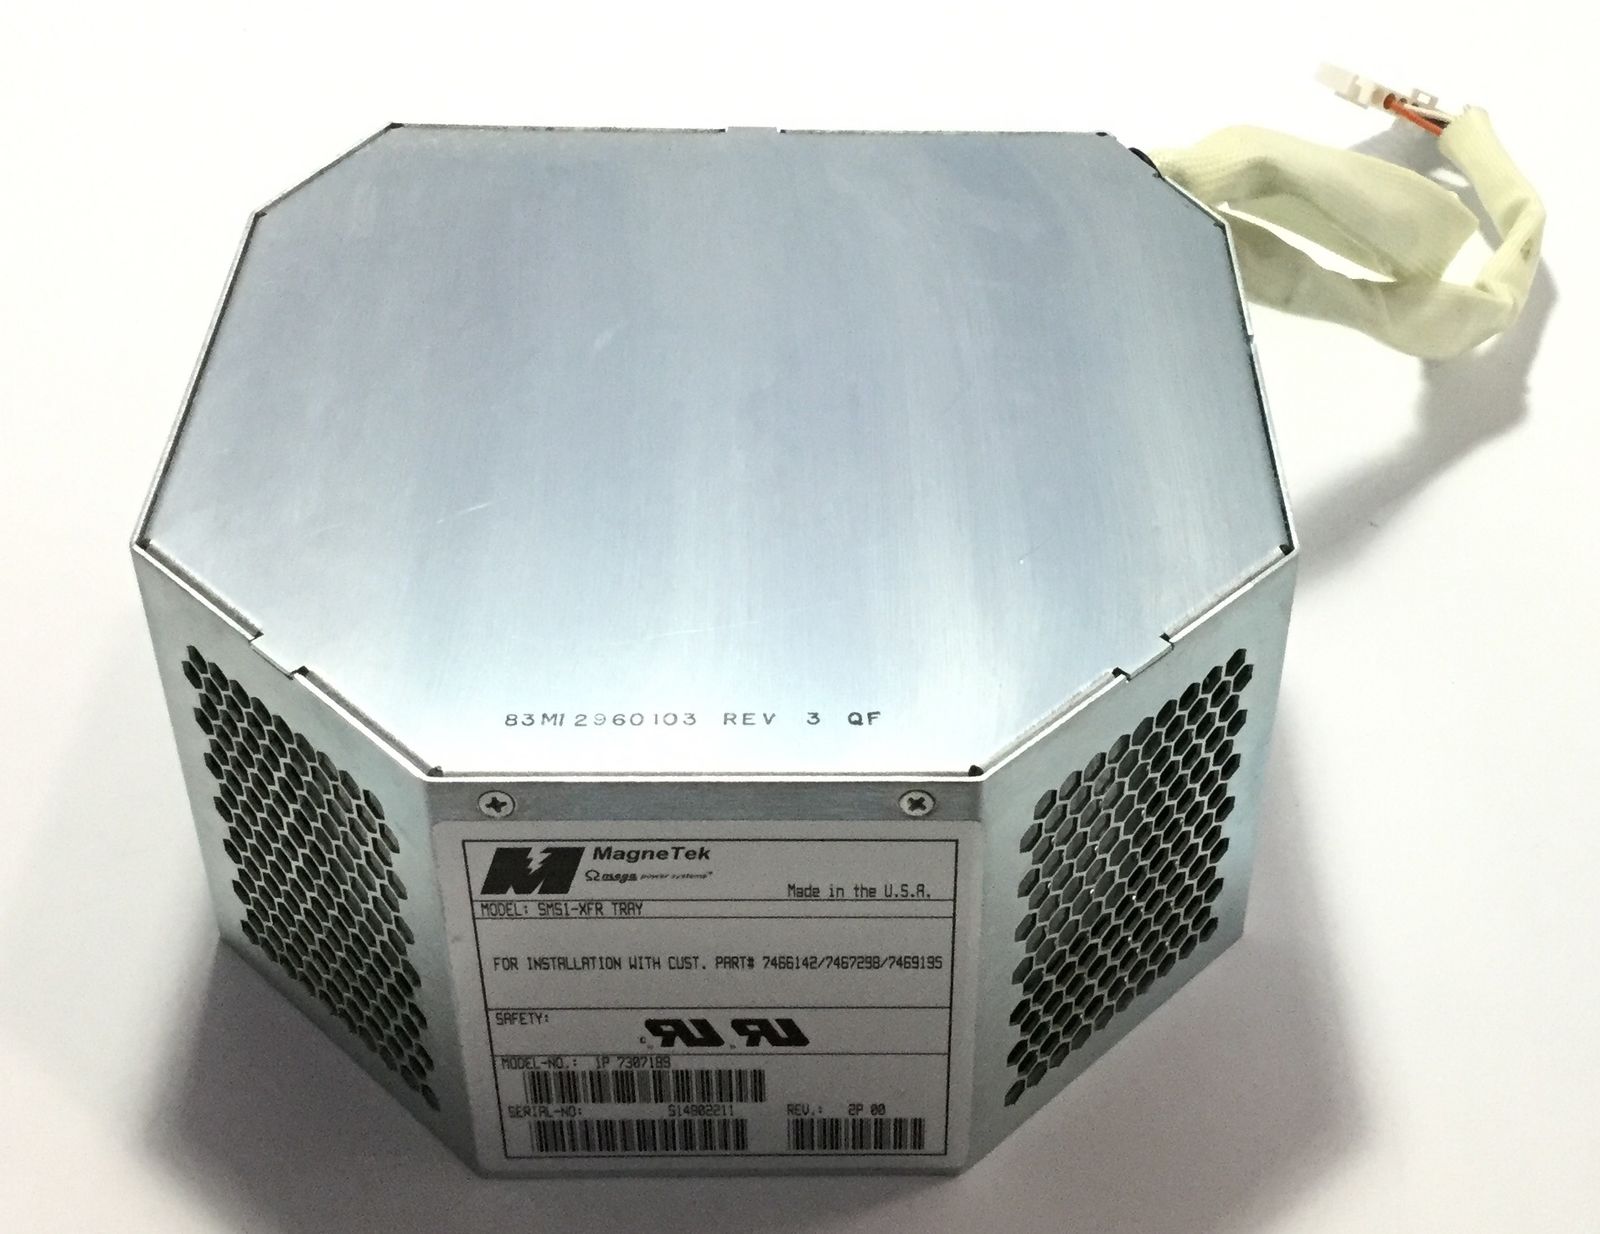 Siemens Sonoline Antares Ultrasound Magnetek 7307189 Main Power Supply SMS-XFR DIAGNOSTIC ULTRASOUND MACHINES FOR SALE